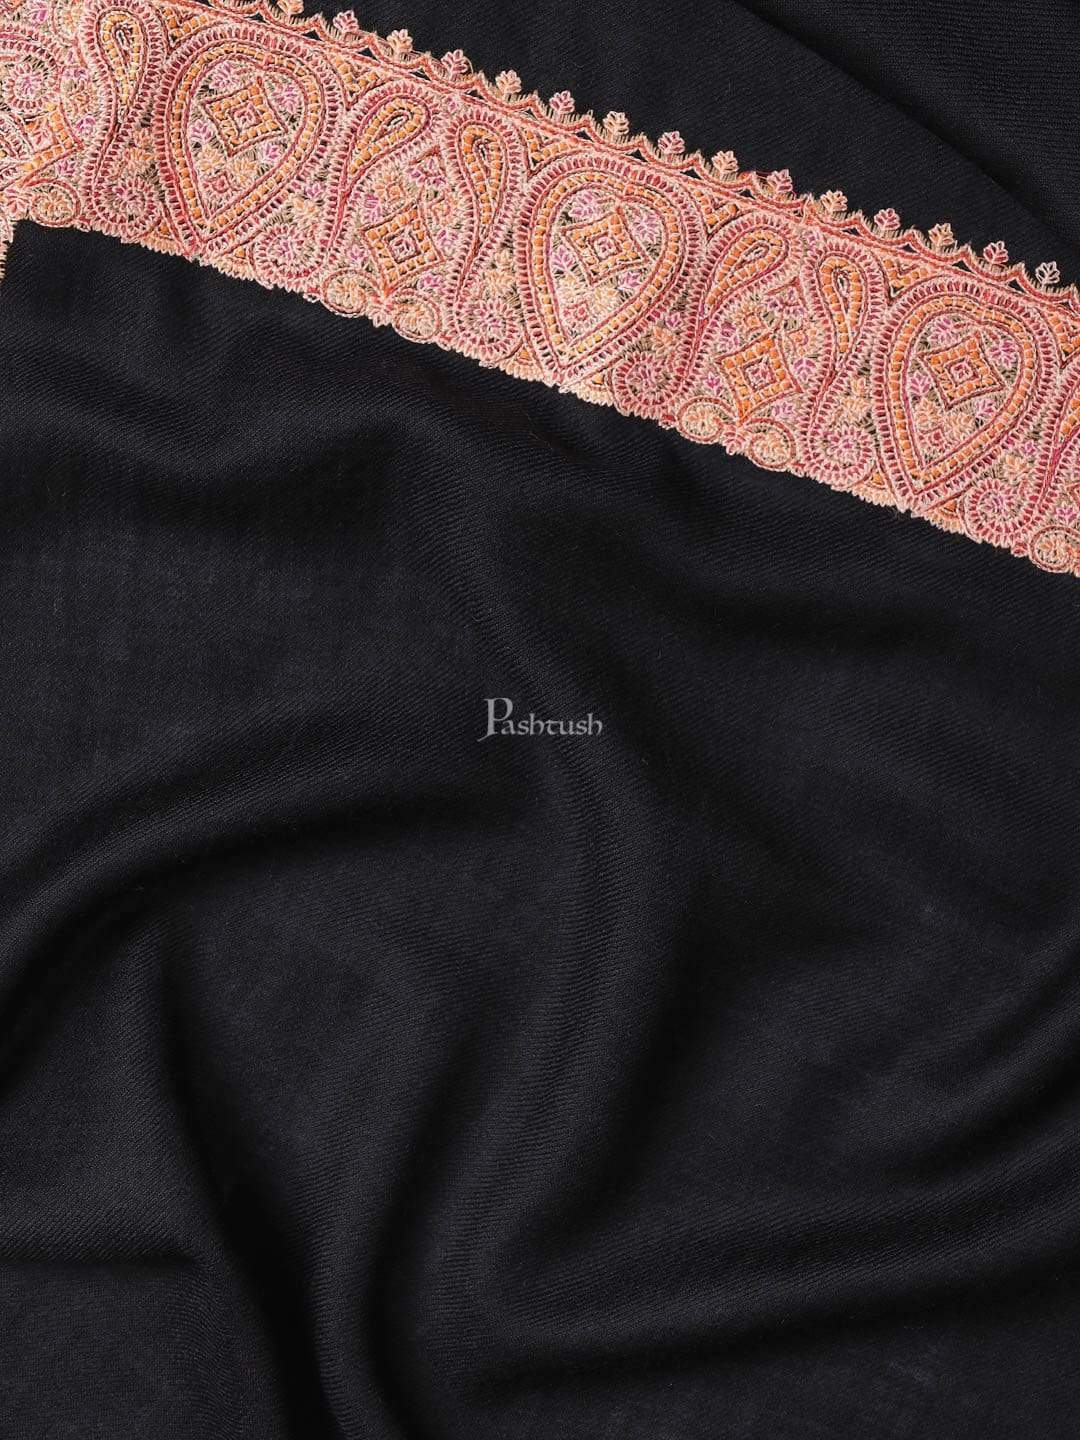 Pashtush India 100x200 Pashtush Mens Hand Embroidery Shawl, 100% Pure Wool Stole, Black